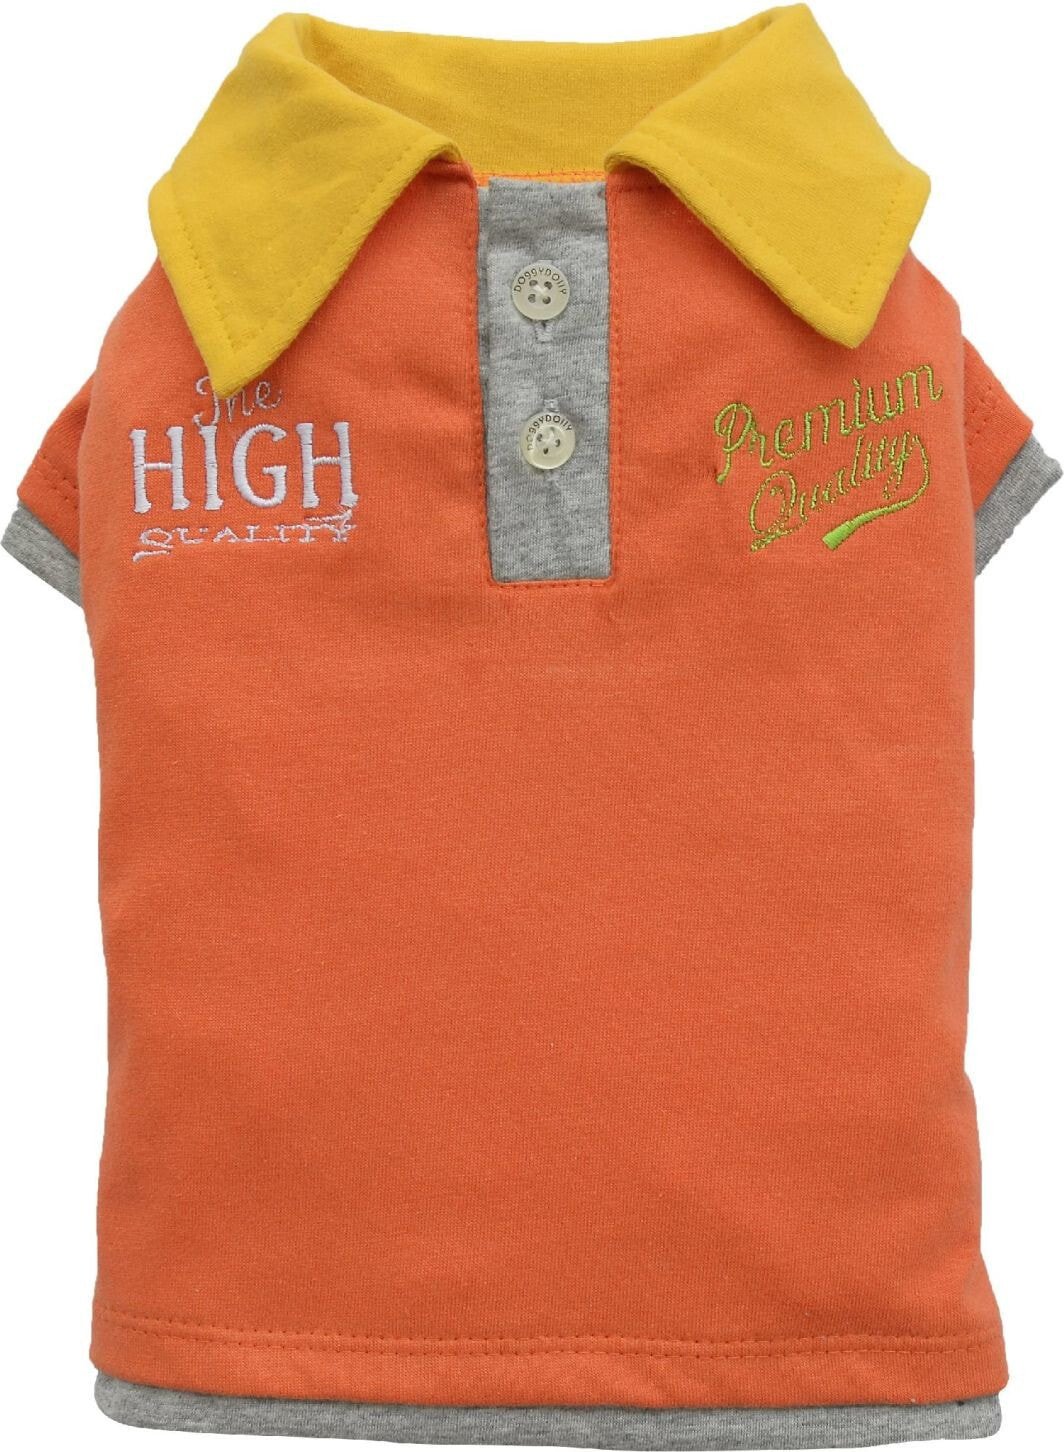 DoggyDolly Polo shirt, orange, S 23-25cm / 36-38cm